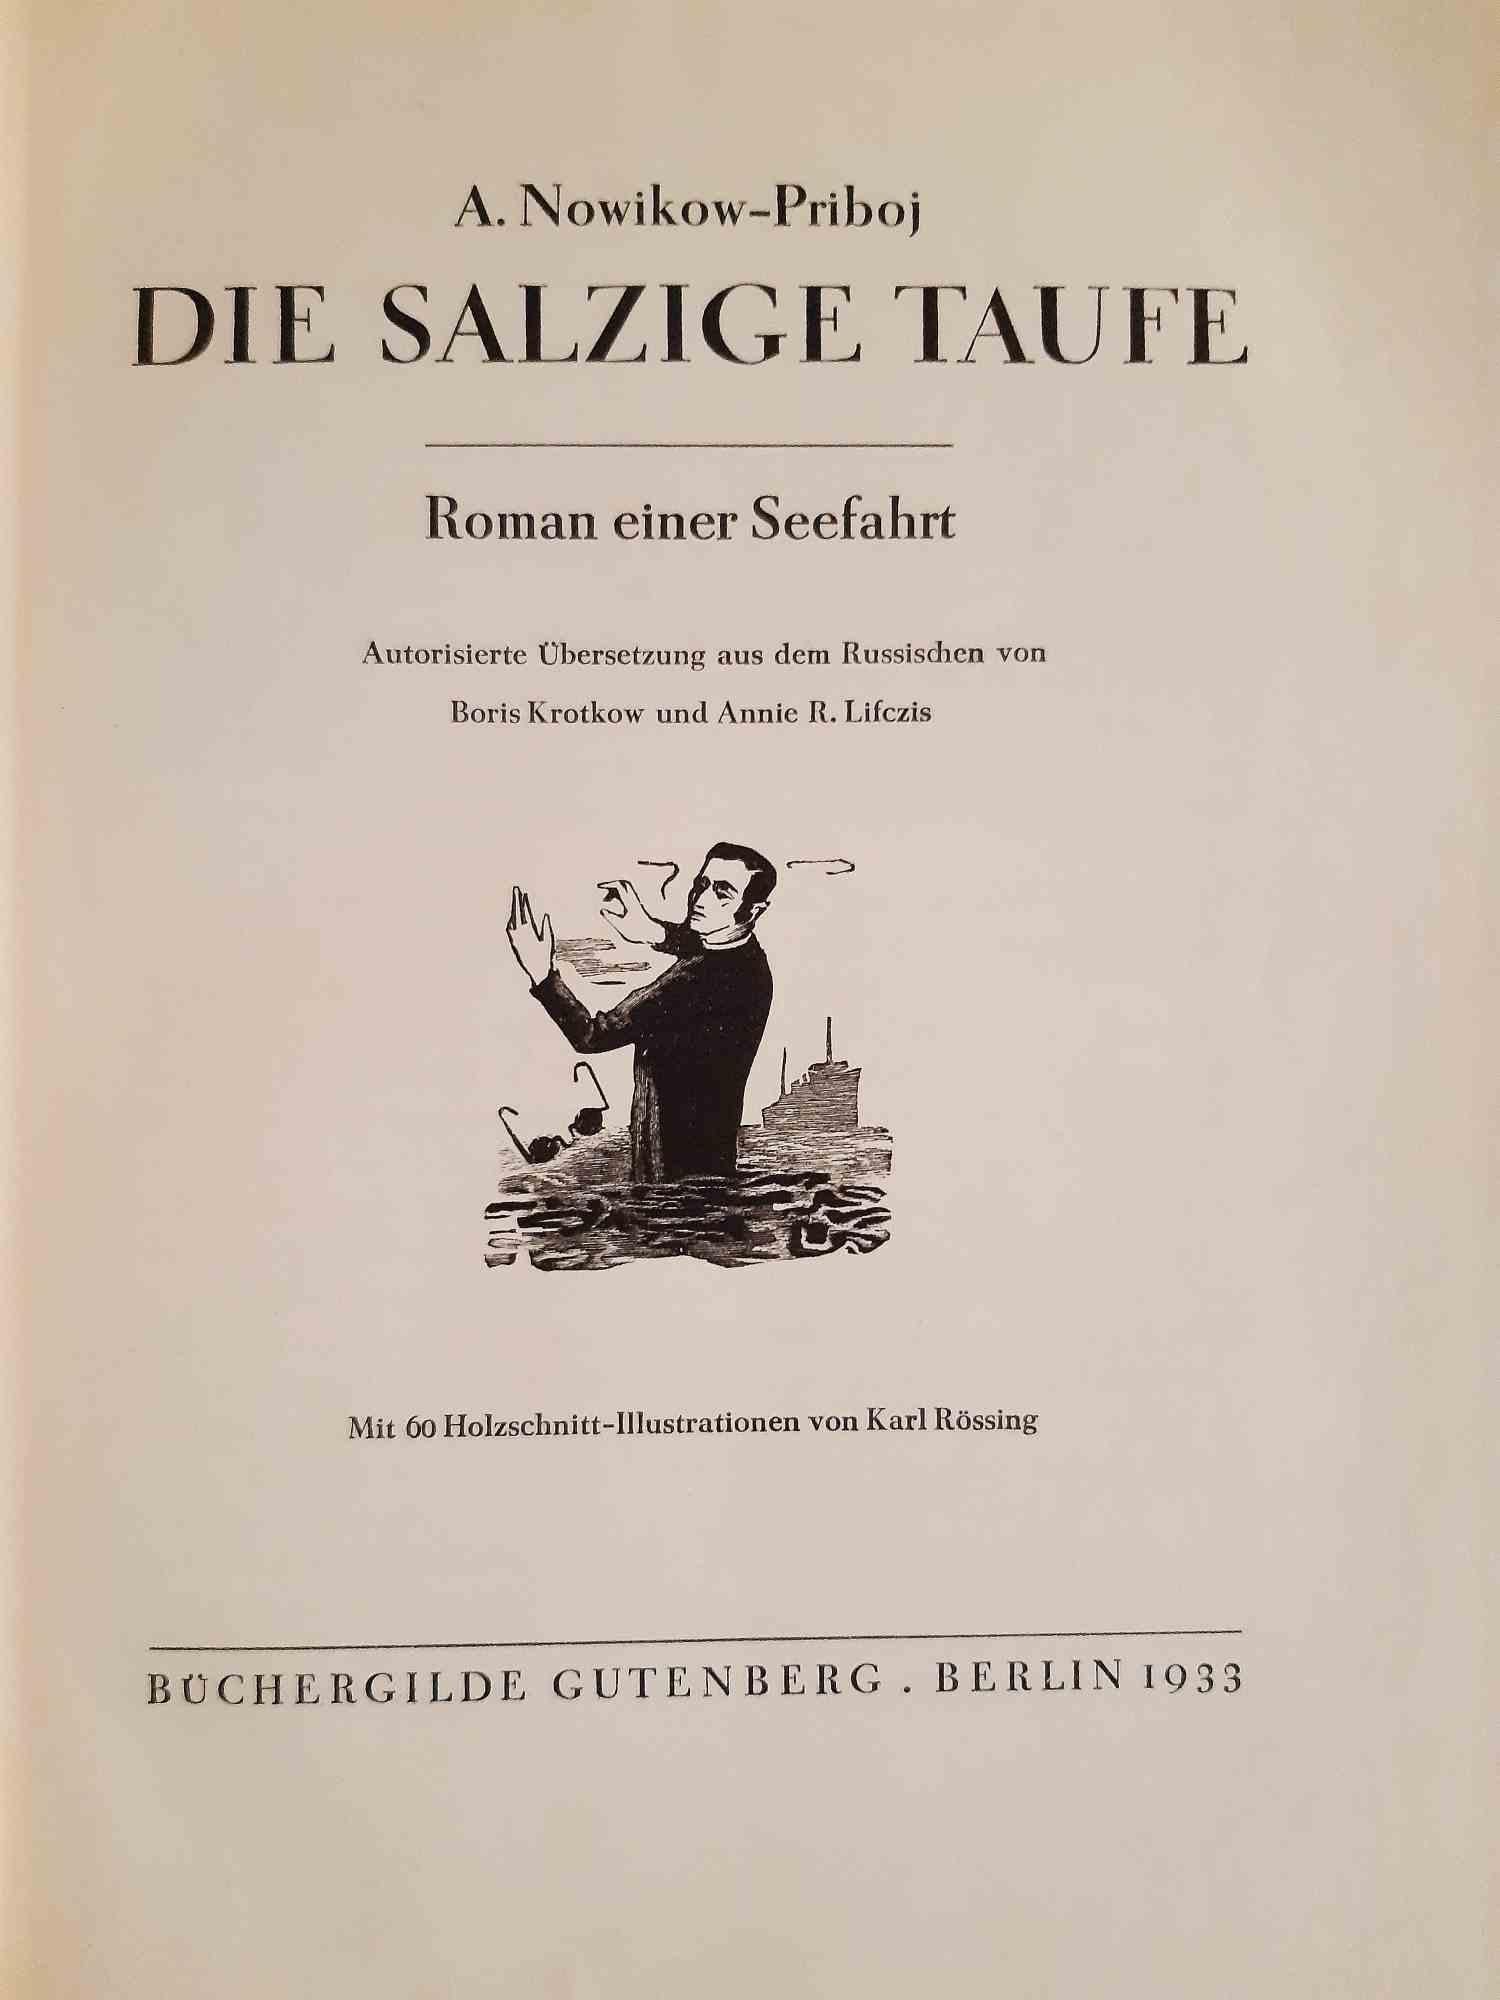 Die Salzige Taufe - Original Rare book Illustrated by Karl Rössing - 1933 For Sale 3